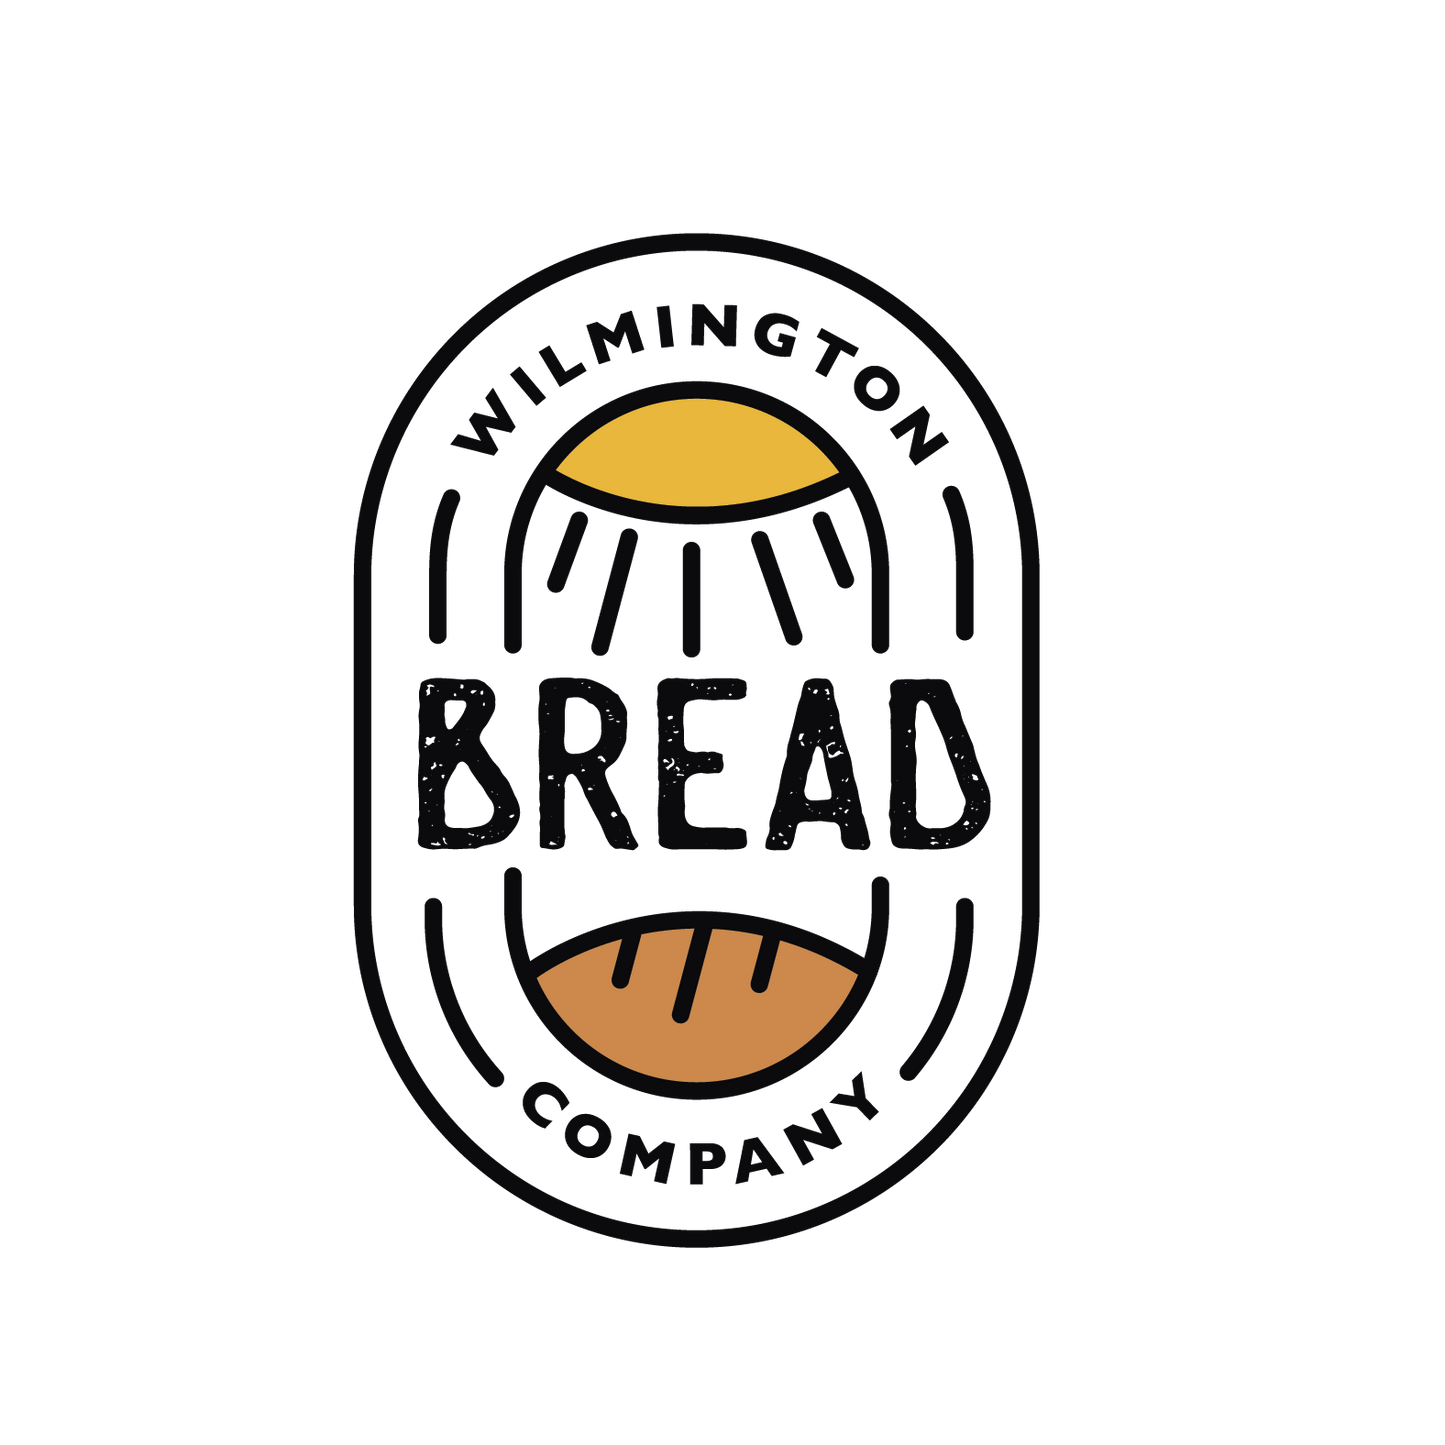 Bread - Sliced sourdough sandwich, Loaf 1 count - LOCAL